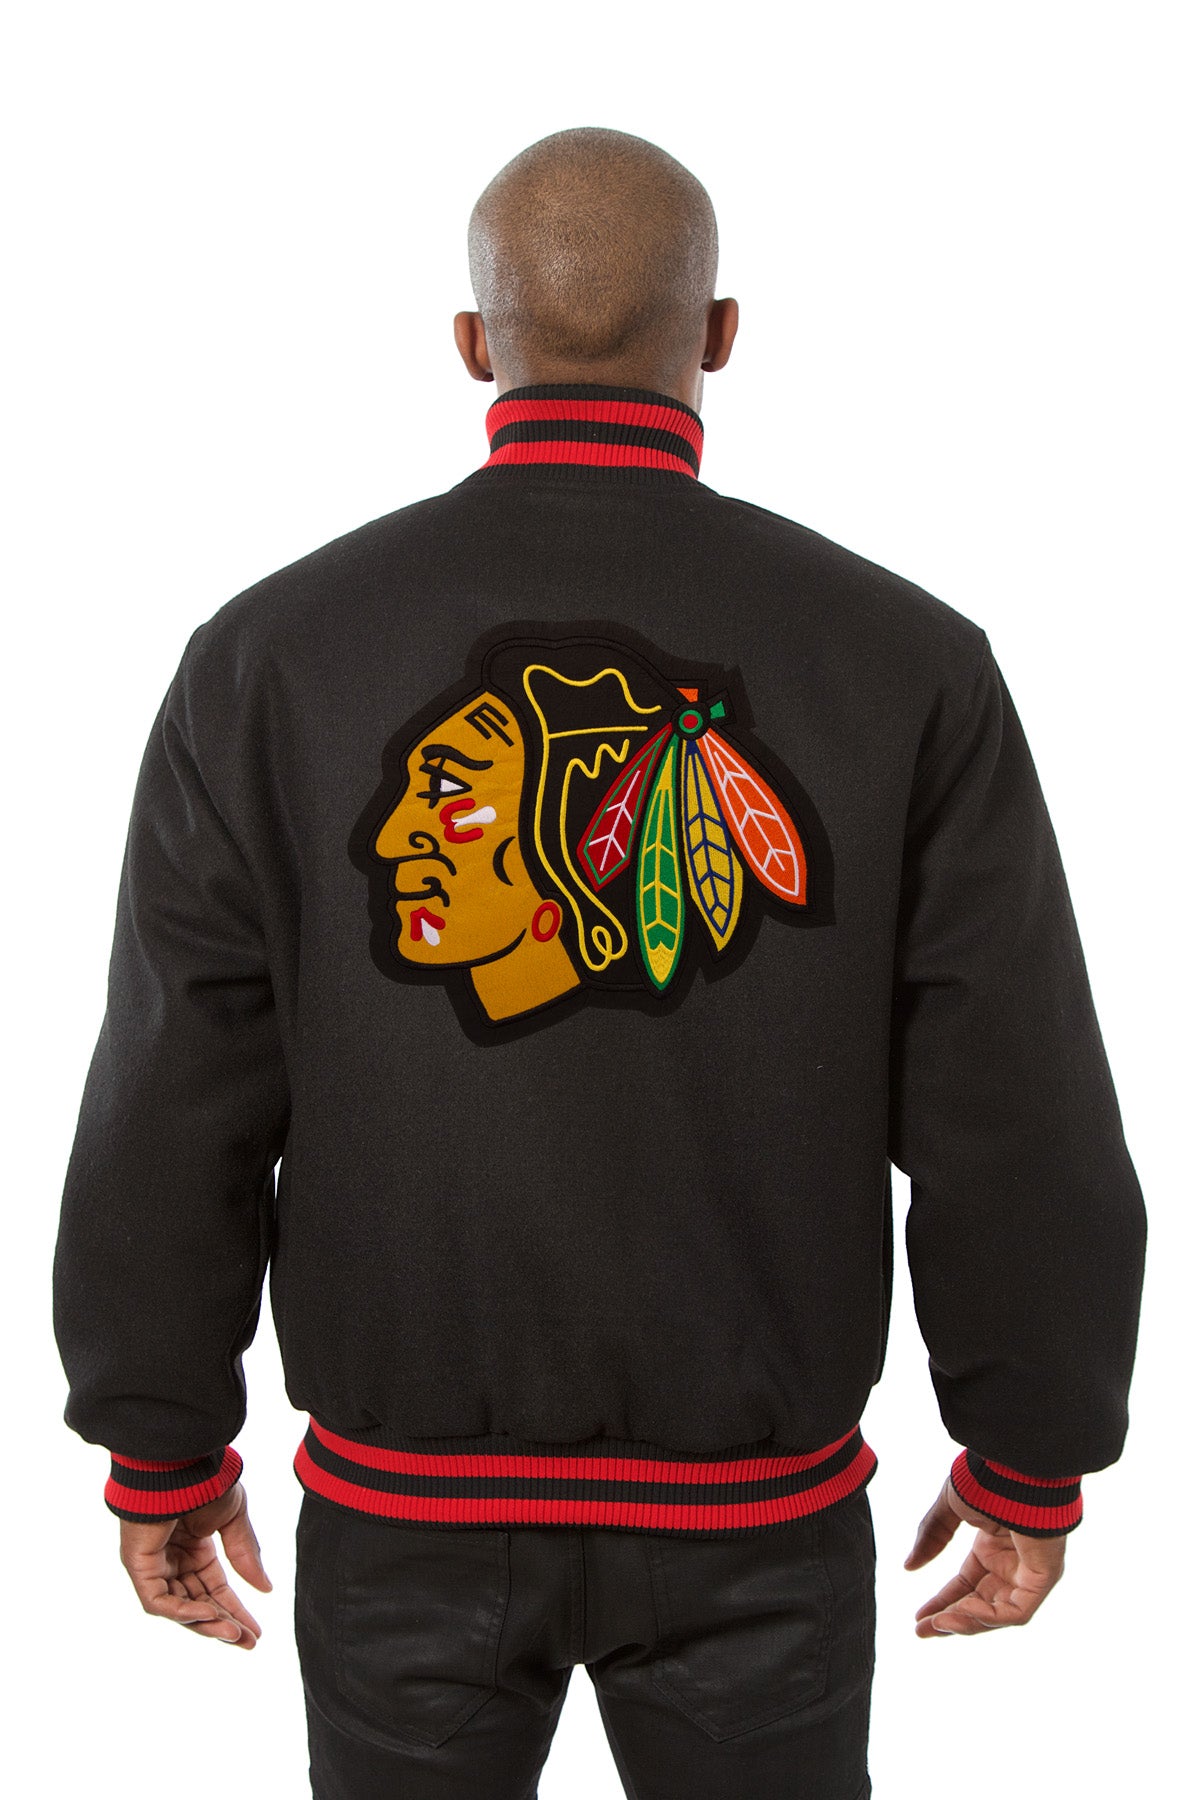 Chicago Blackhawks Embroidered Wool Jacket